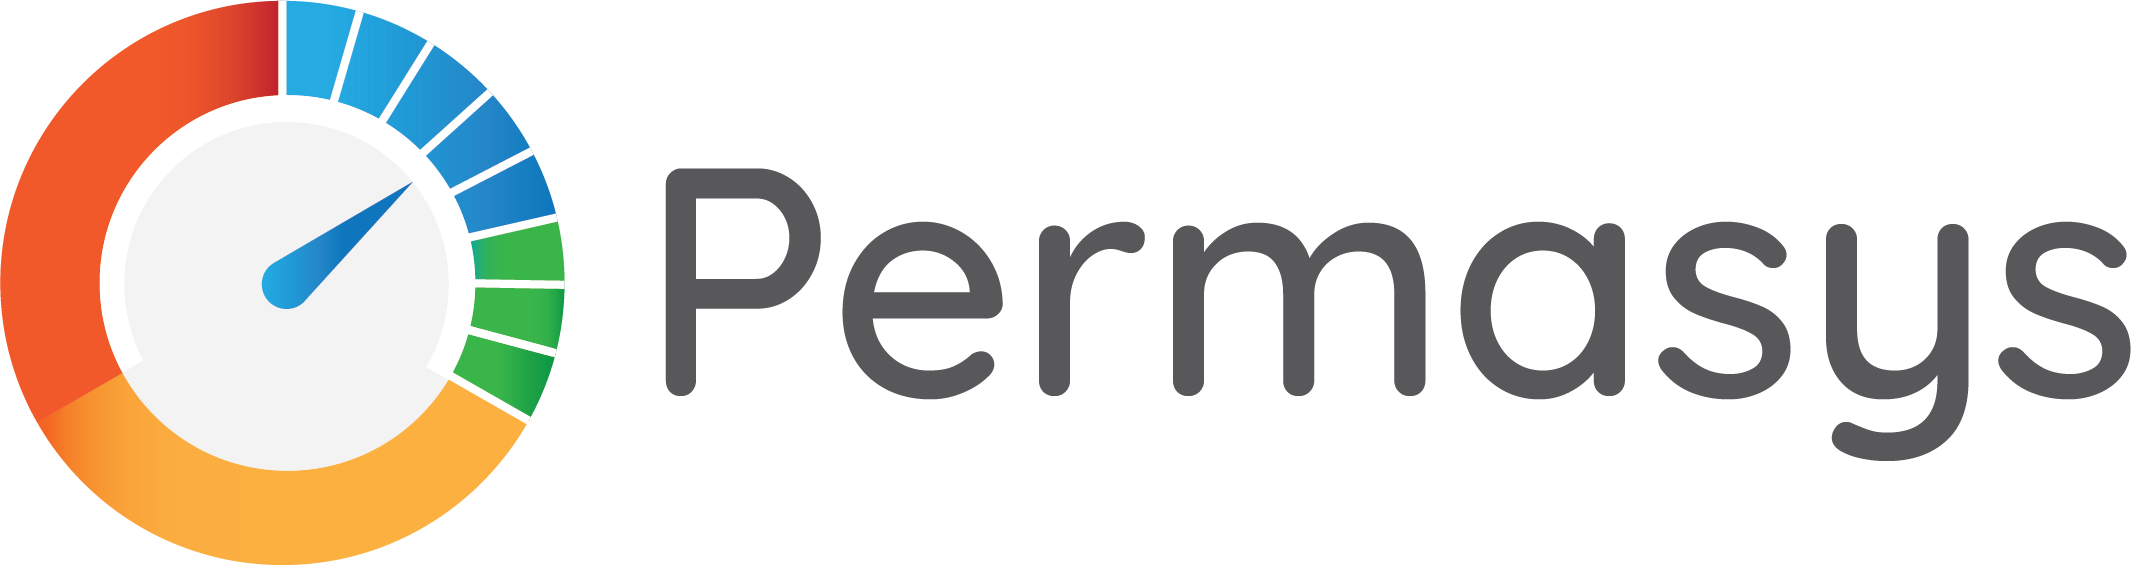 Permasys Logo [Design 2] (final)